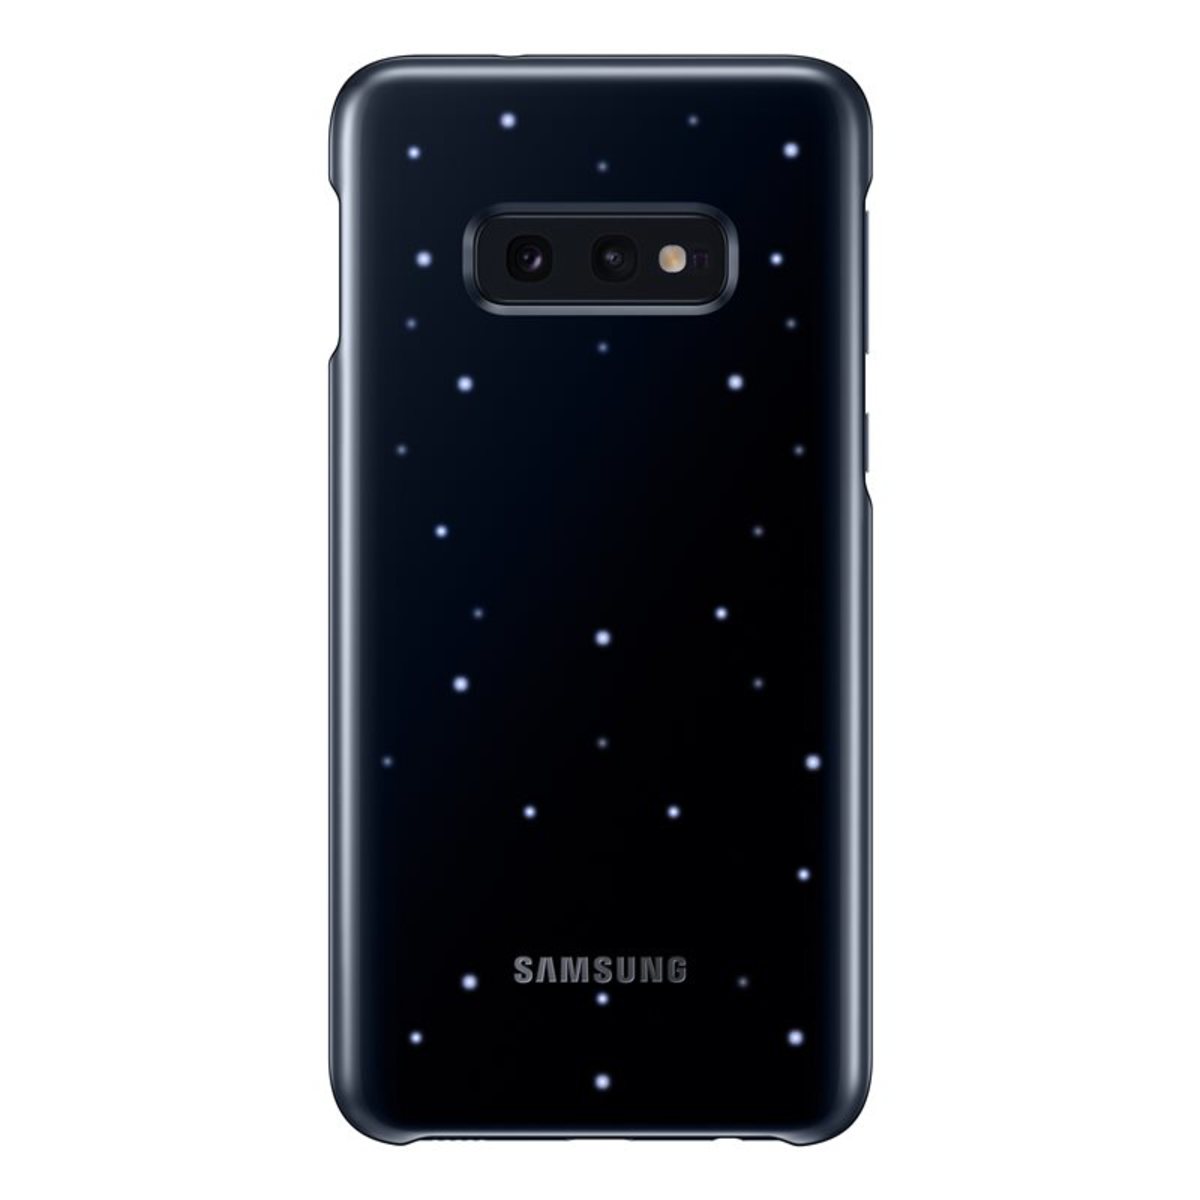 Samsung Galaxy S10e LED Back cover Black KG970